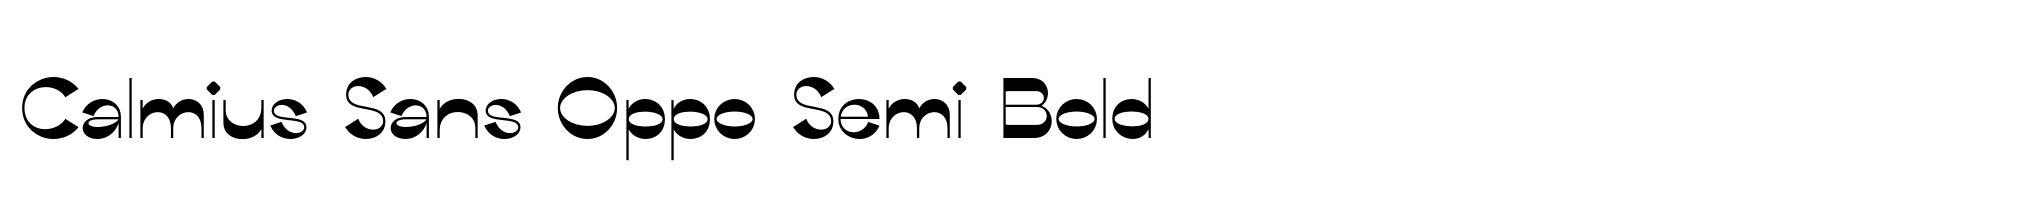 Calmius Sans Oppo Semi Bold image